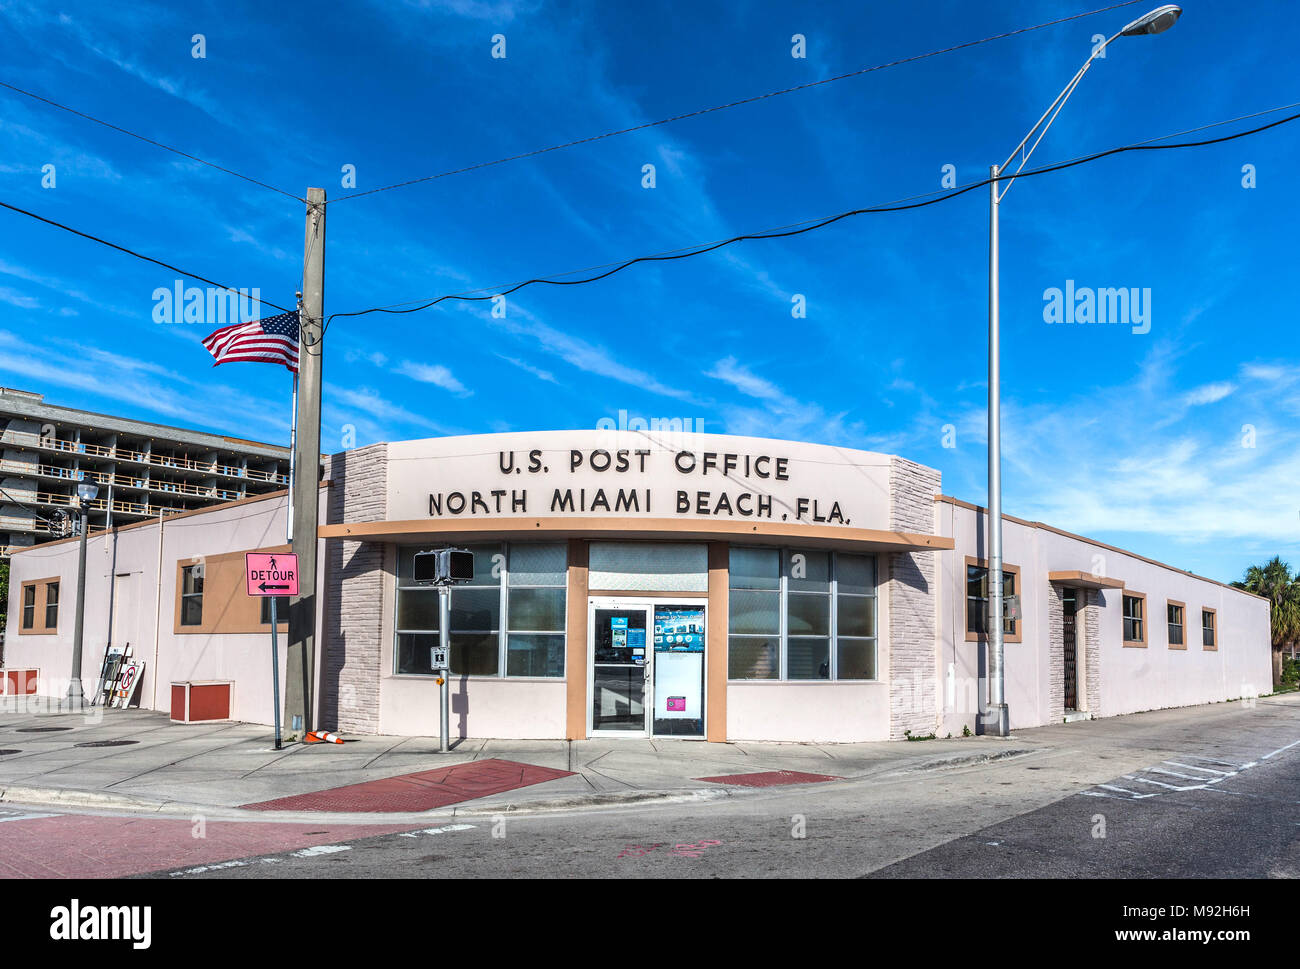 Bureau de poste des États-Unis, North Miami Beach, Floride, USA Photo Stock  - Alamy